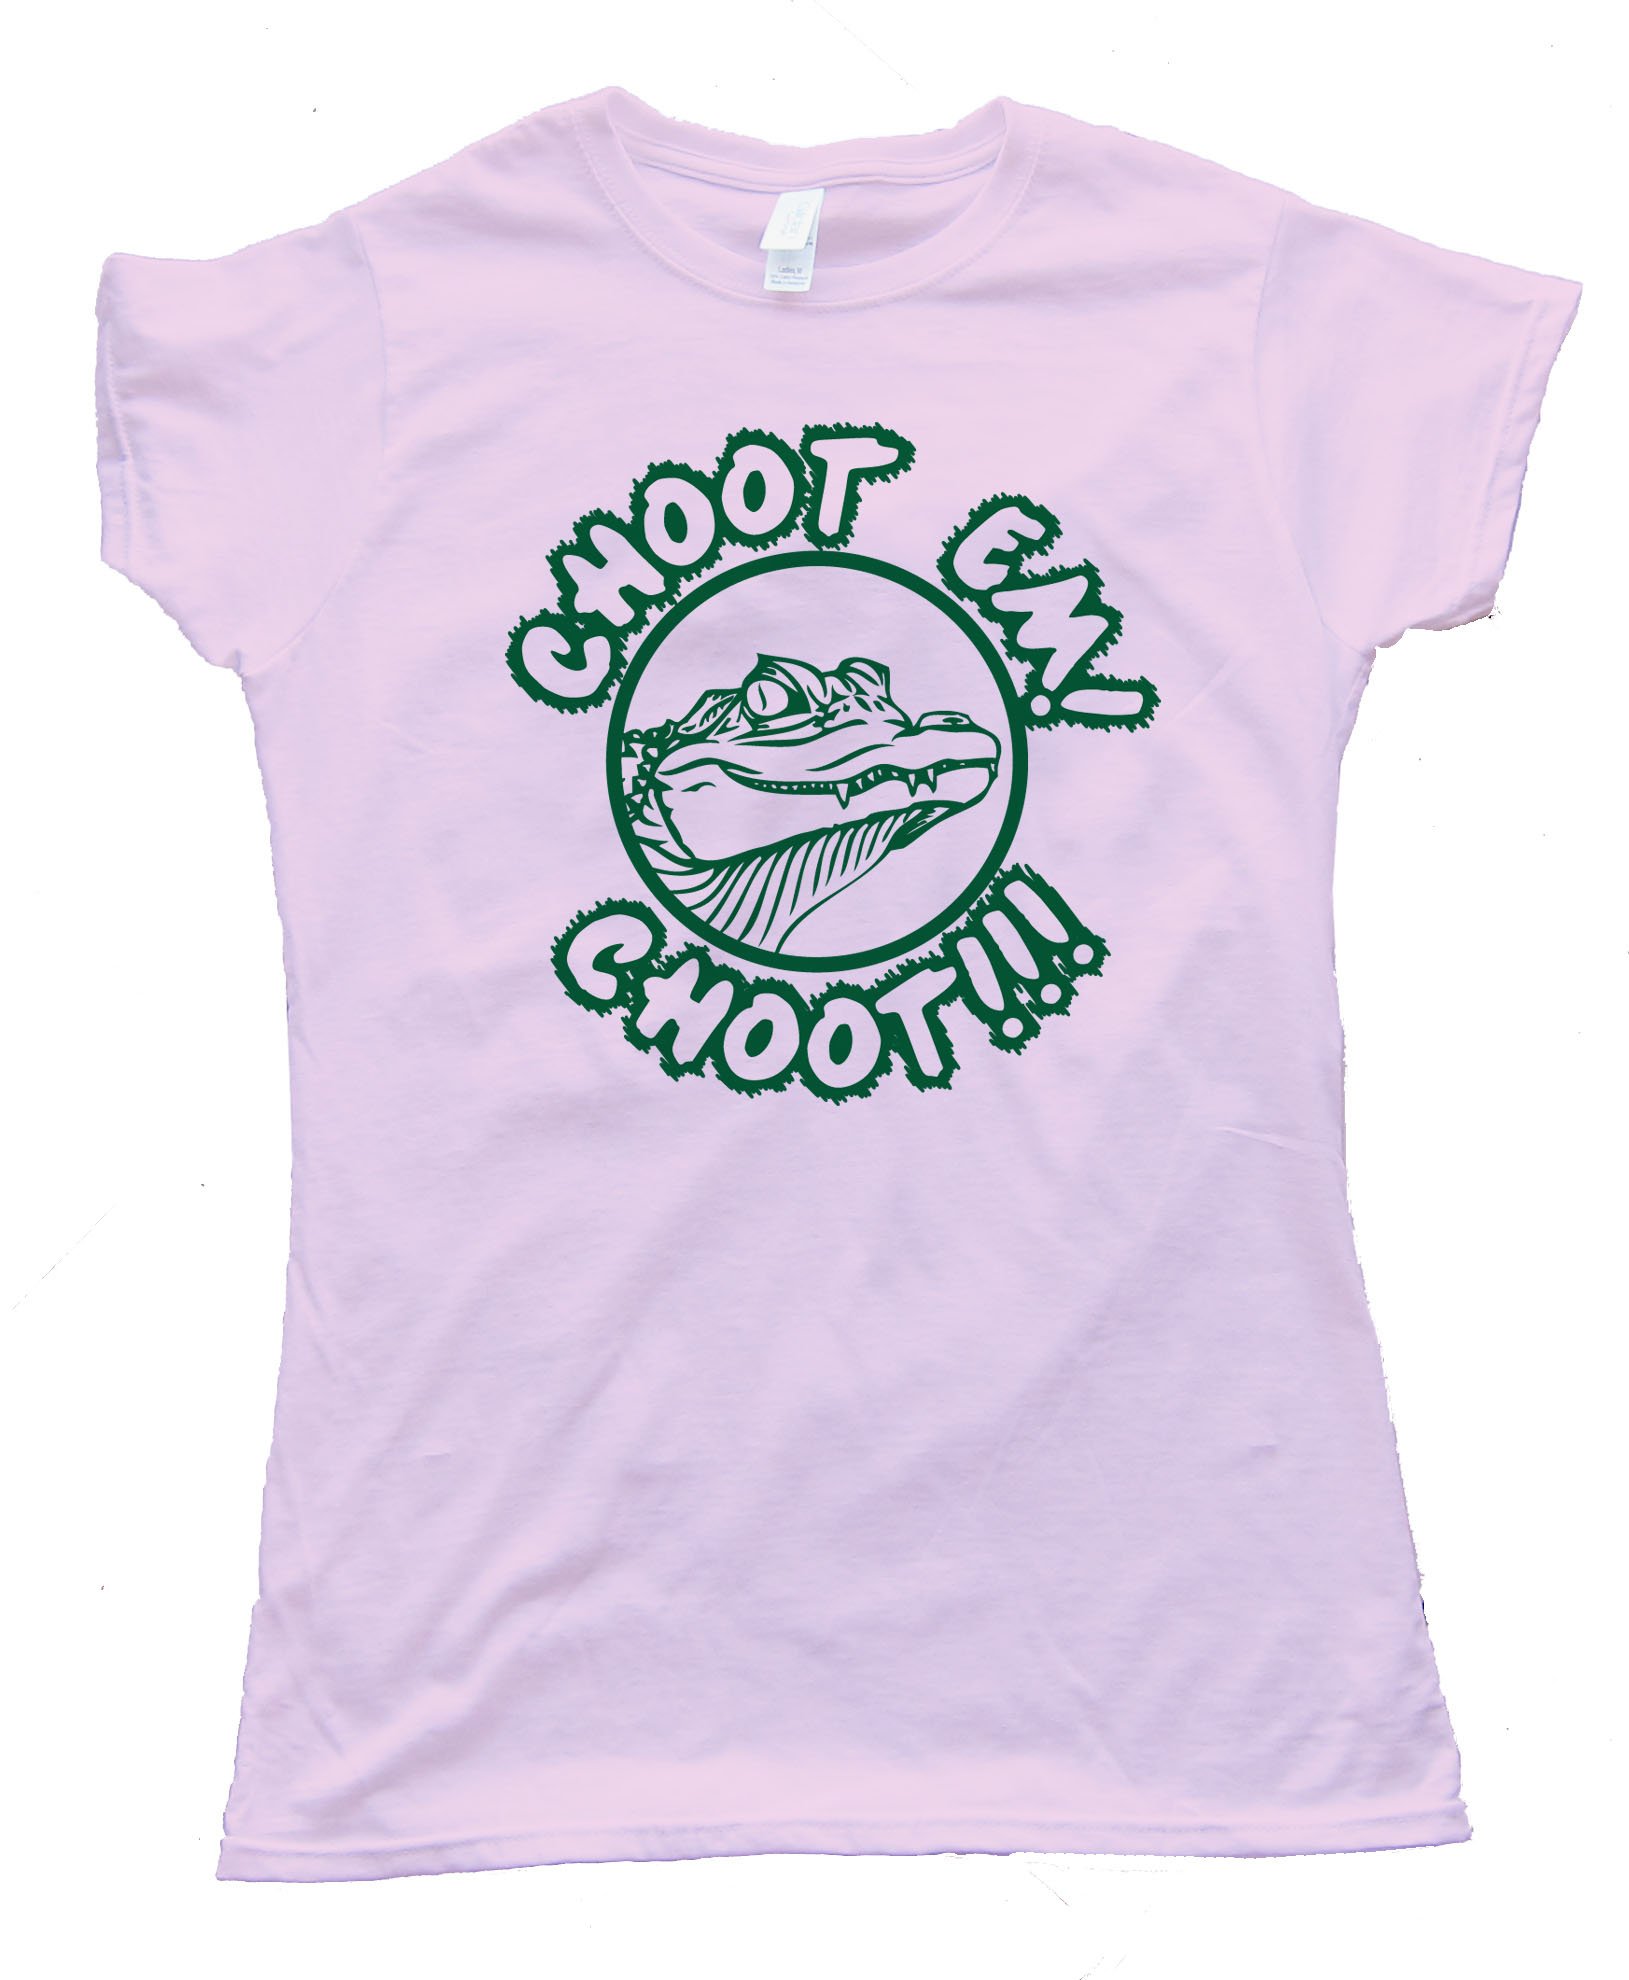 Womens Choot Em Choot!!! - Swamp People Tee Shirt